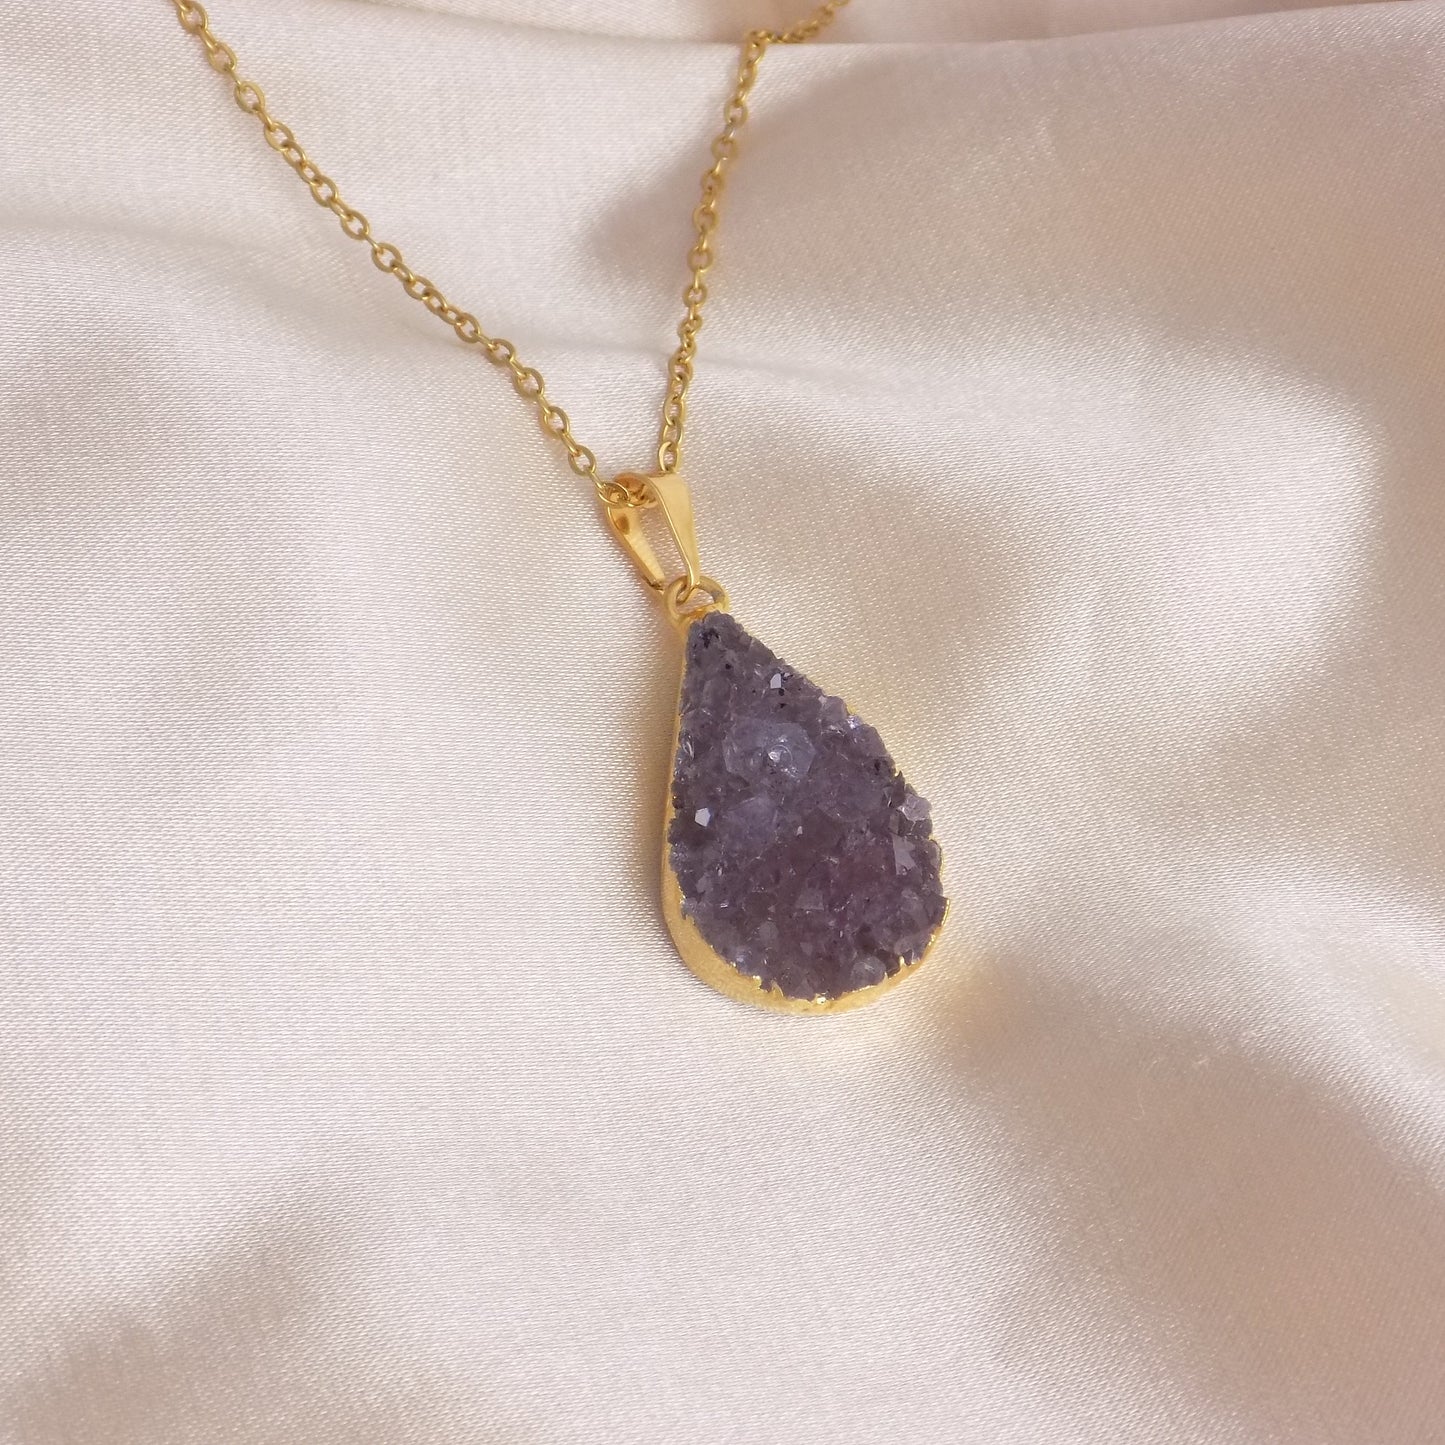 Teardrop Amethyst Pendant Necklace Gold - Boho Druzy Crystal